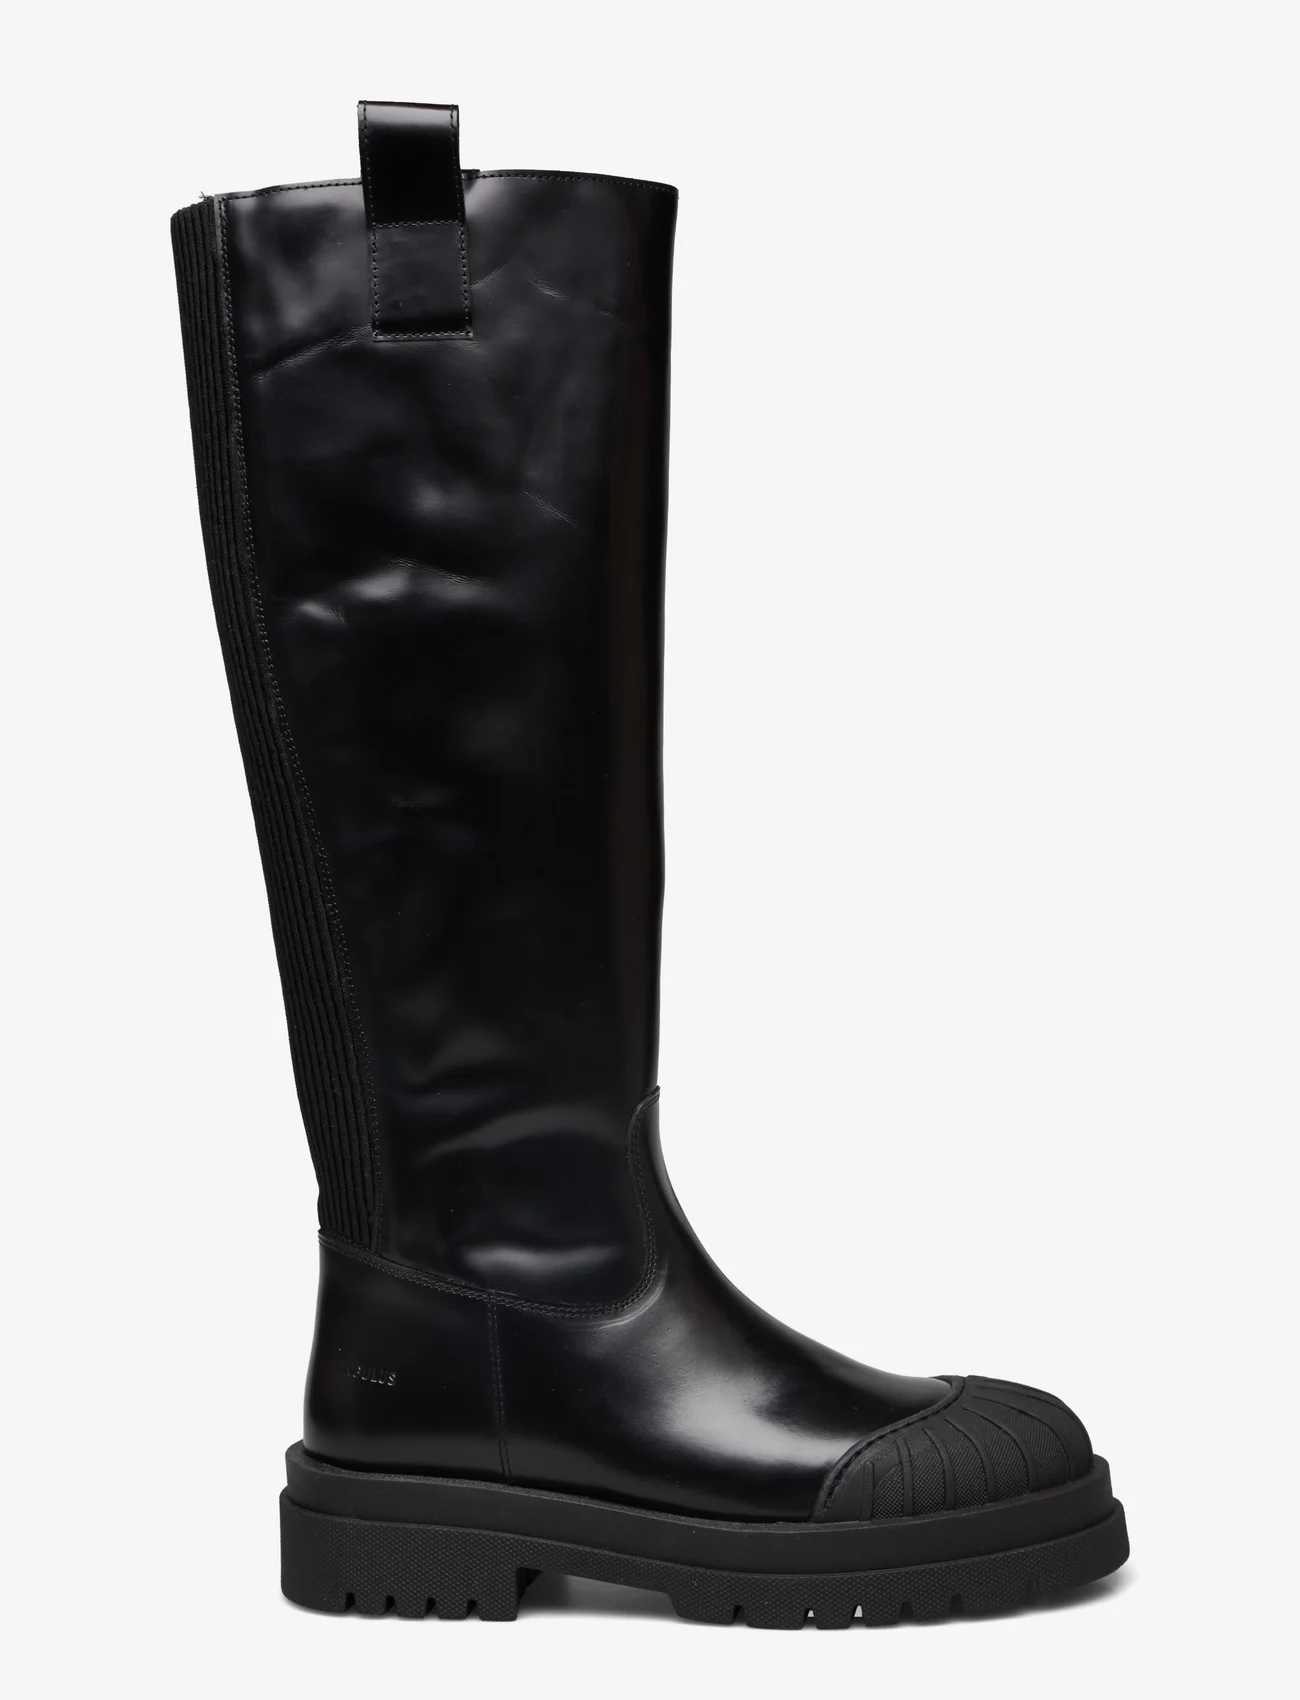 ANGULUS - Boots - flat - knee high boots - 1425/019 black/black - 1